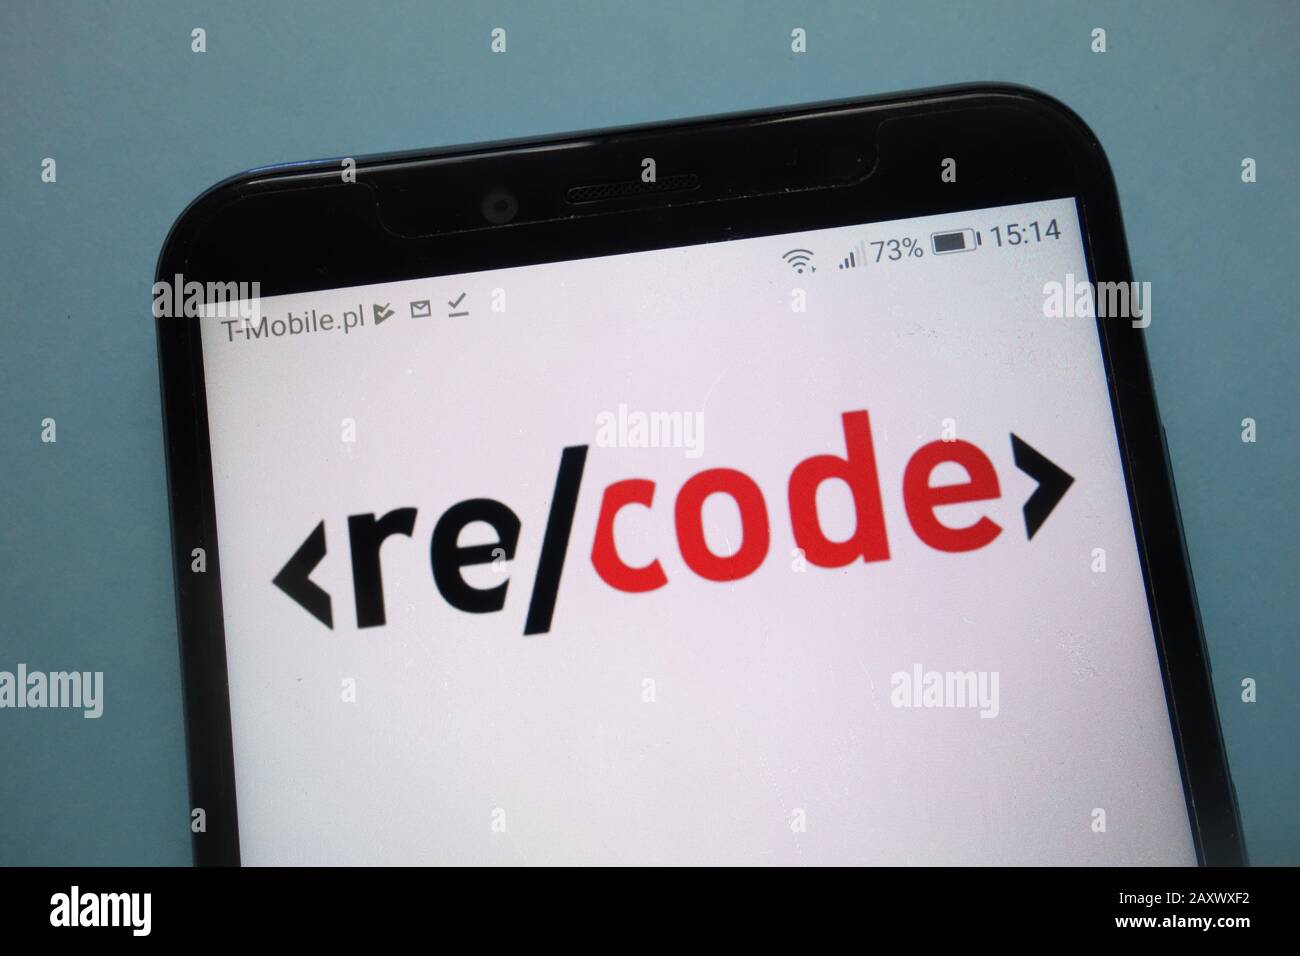 Recode logo displayed on smartphone Stock Photo